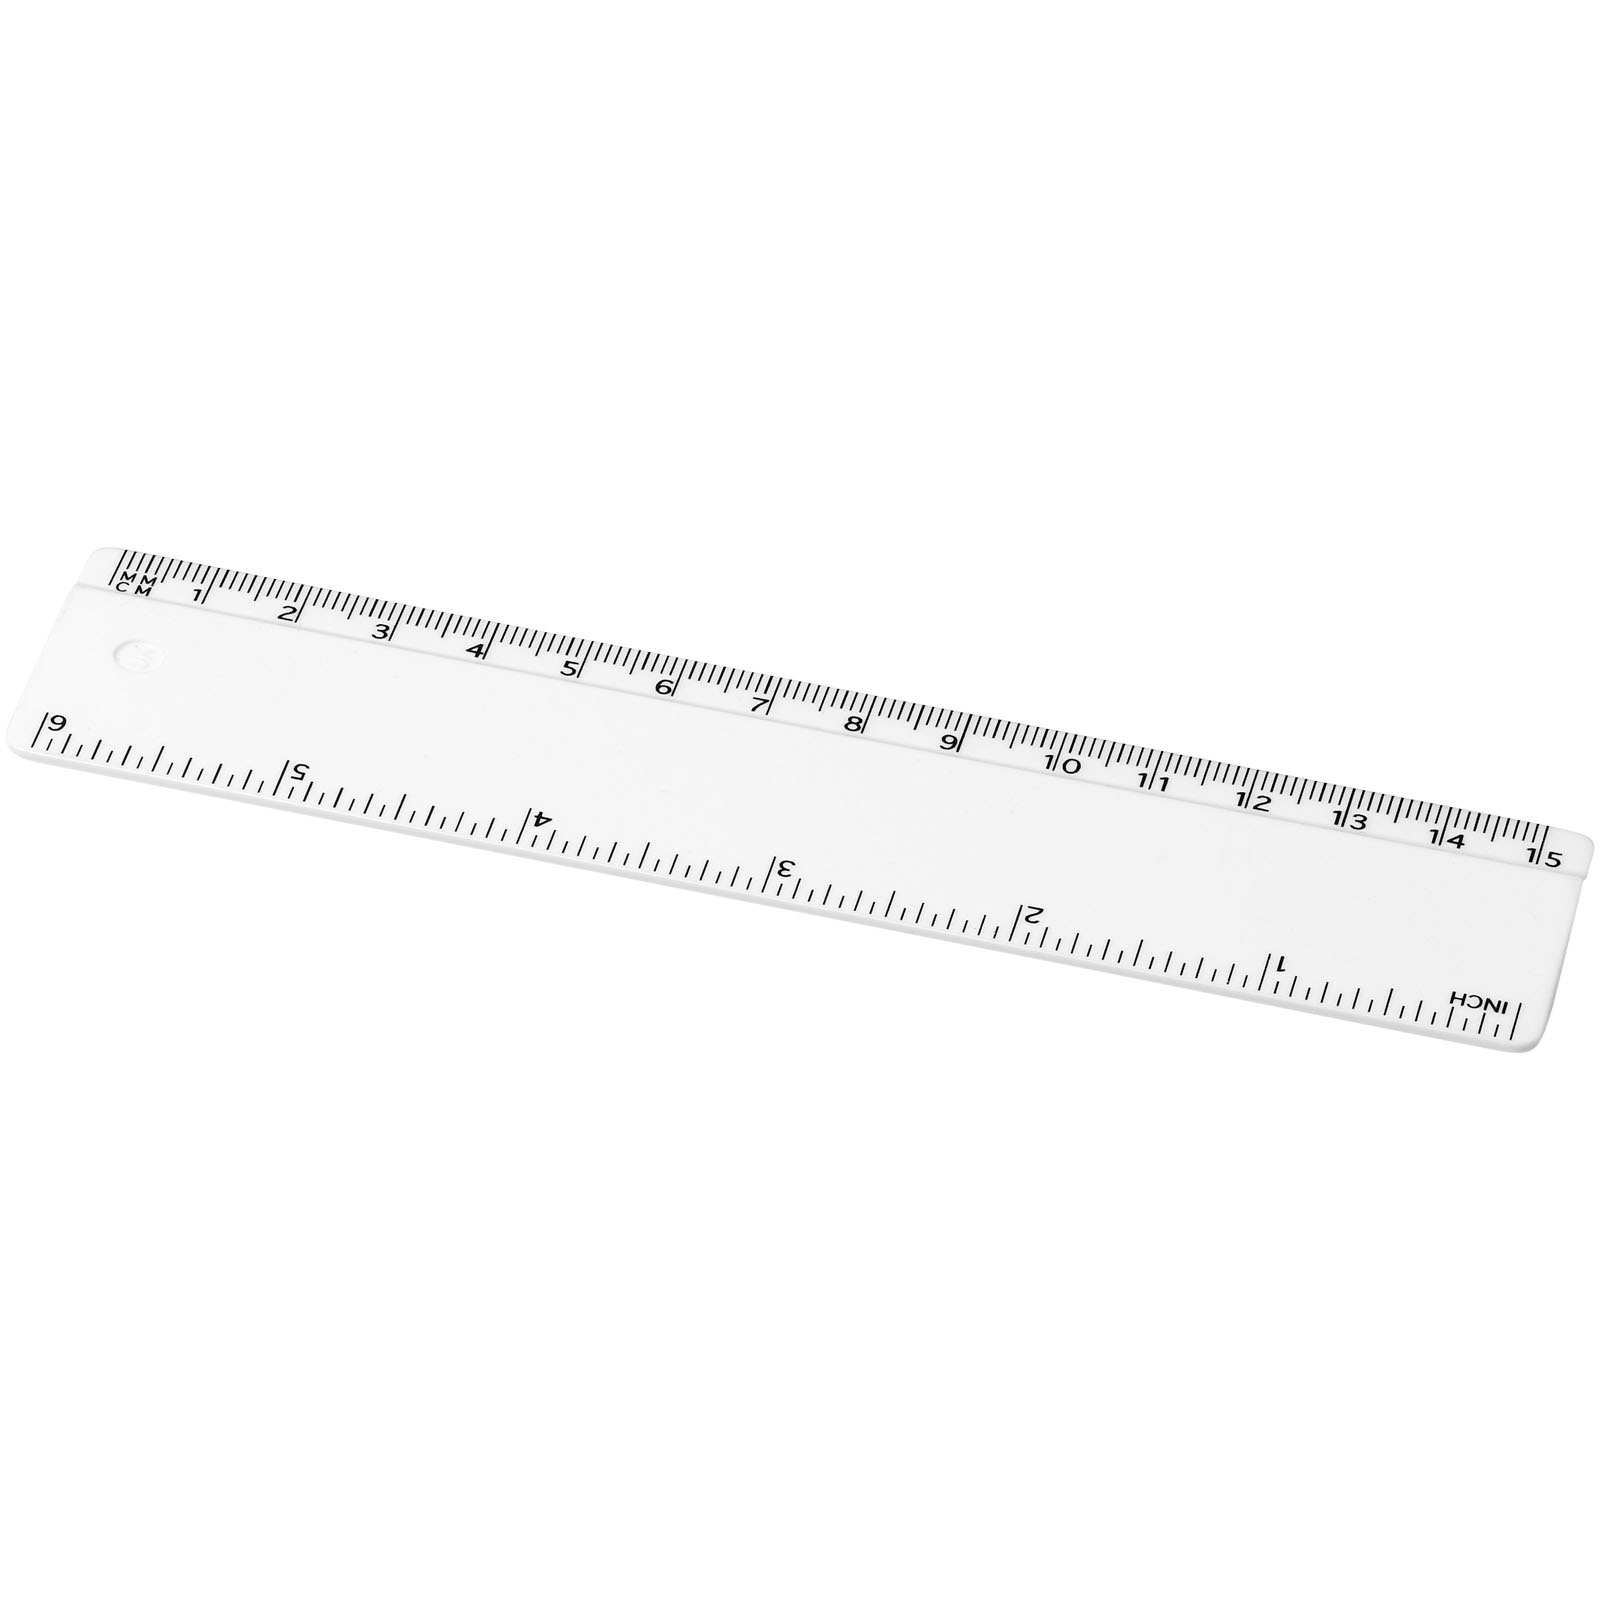 Advertising Desk Accessories - Refari 15 cm recycled plastic ruler